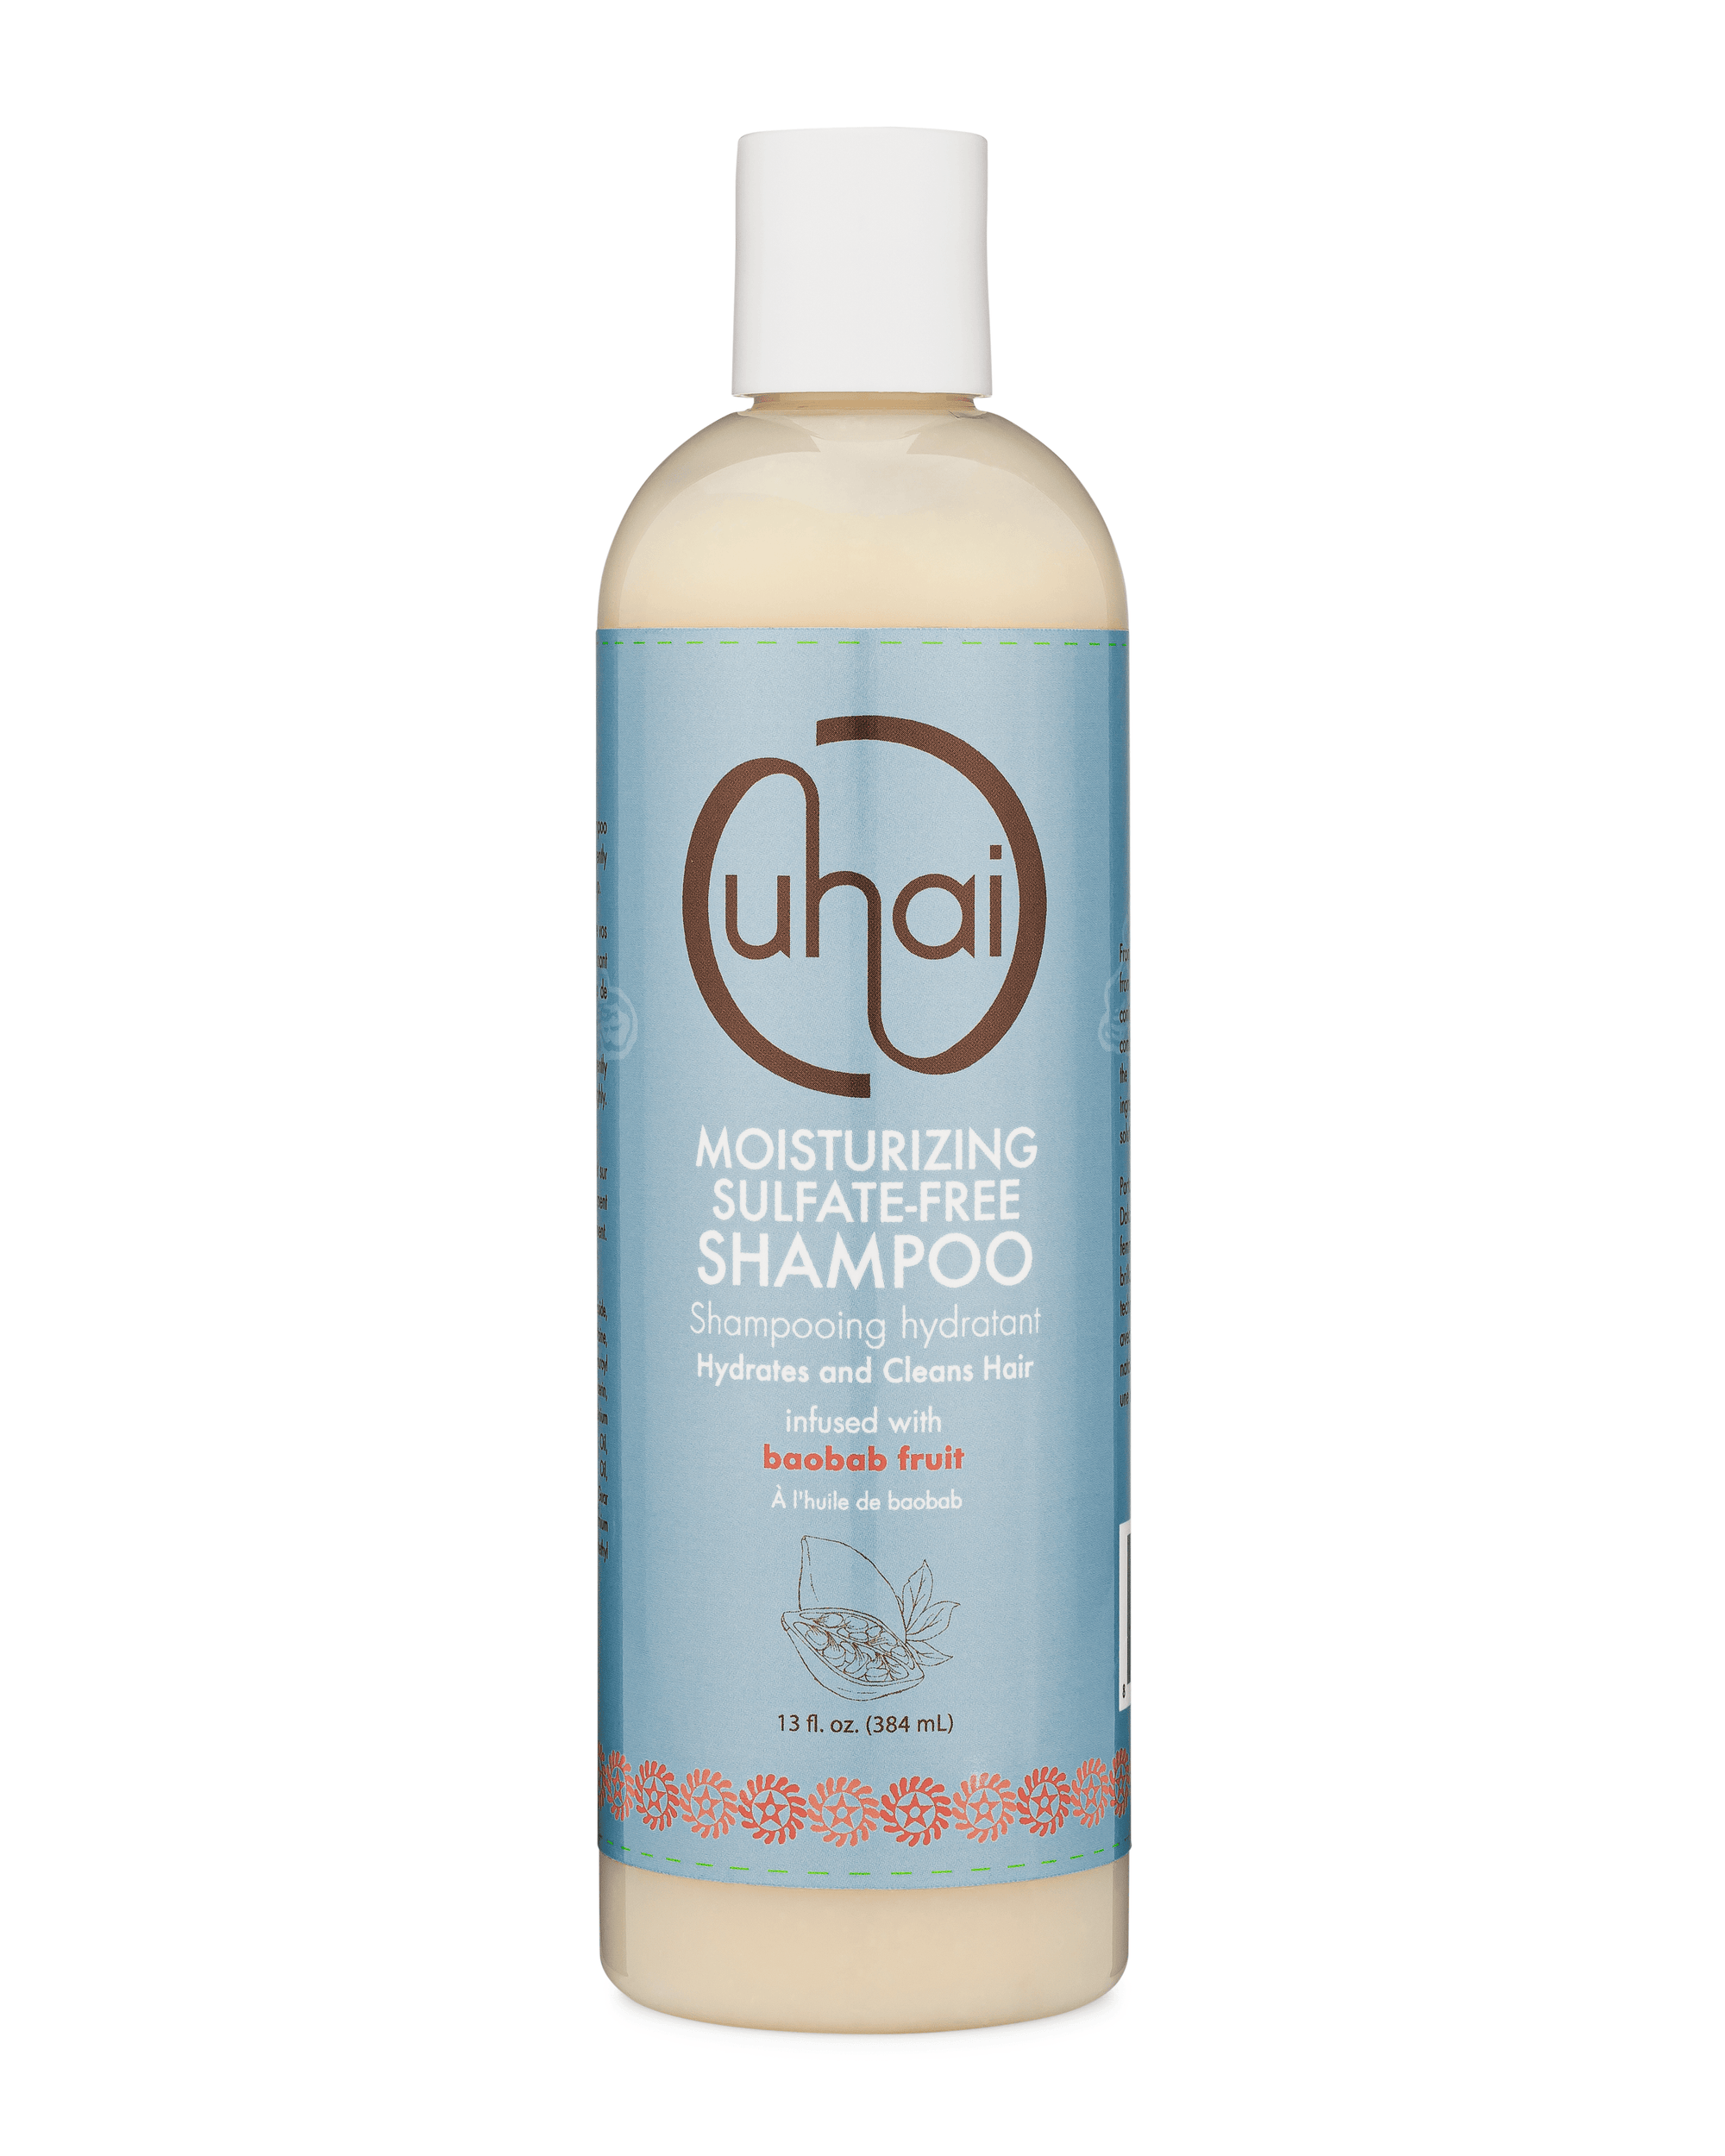 Uhai Hair Moisturizing Sulfate-Free Shampoo